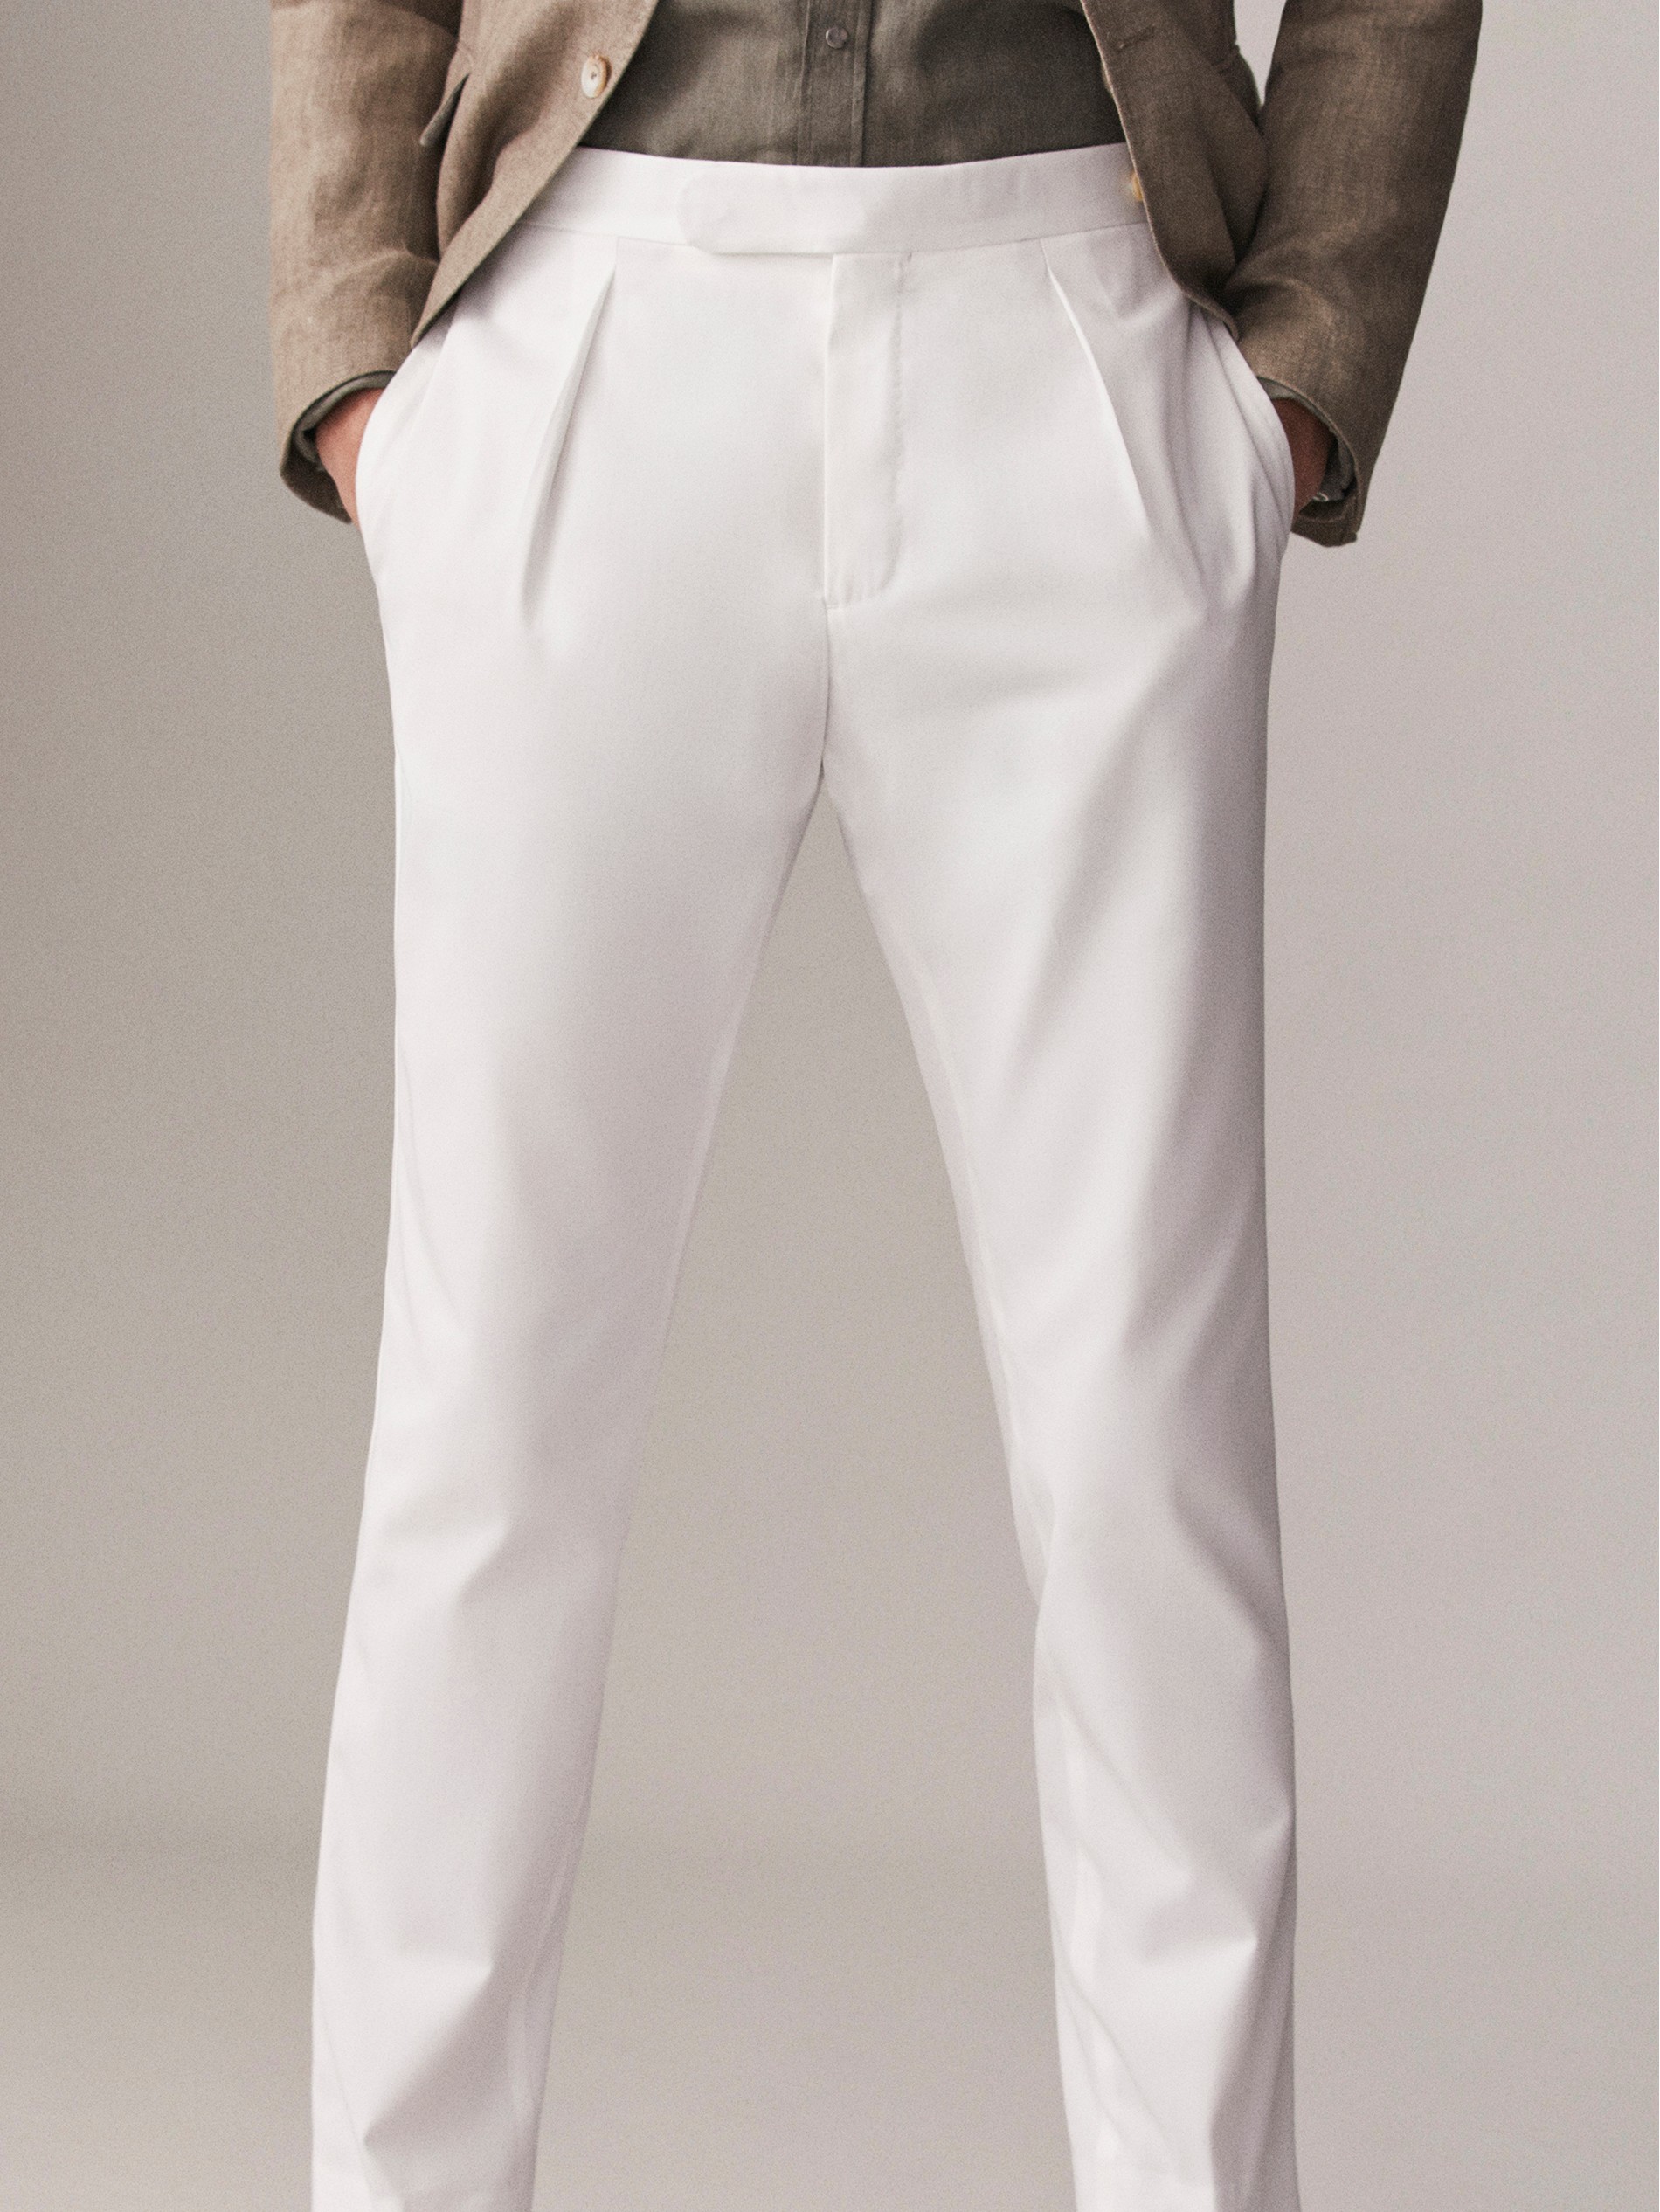 slim cotton trousers